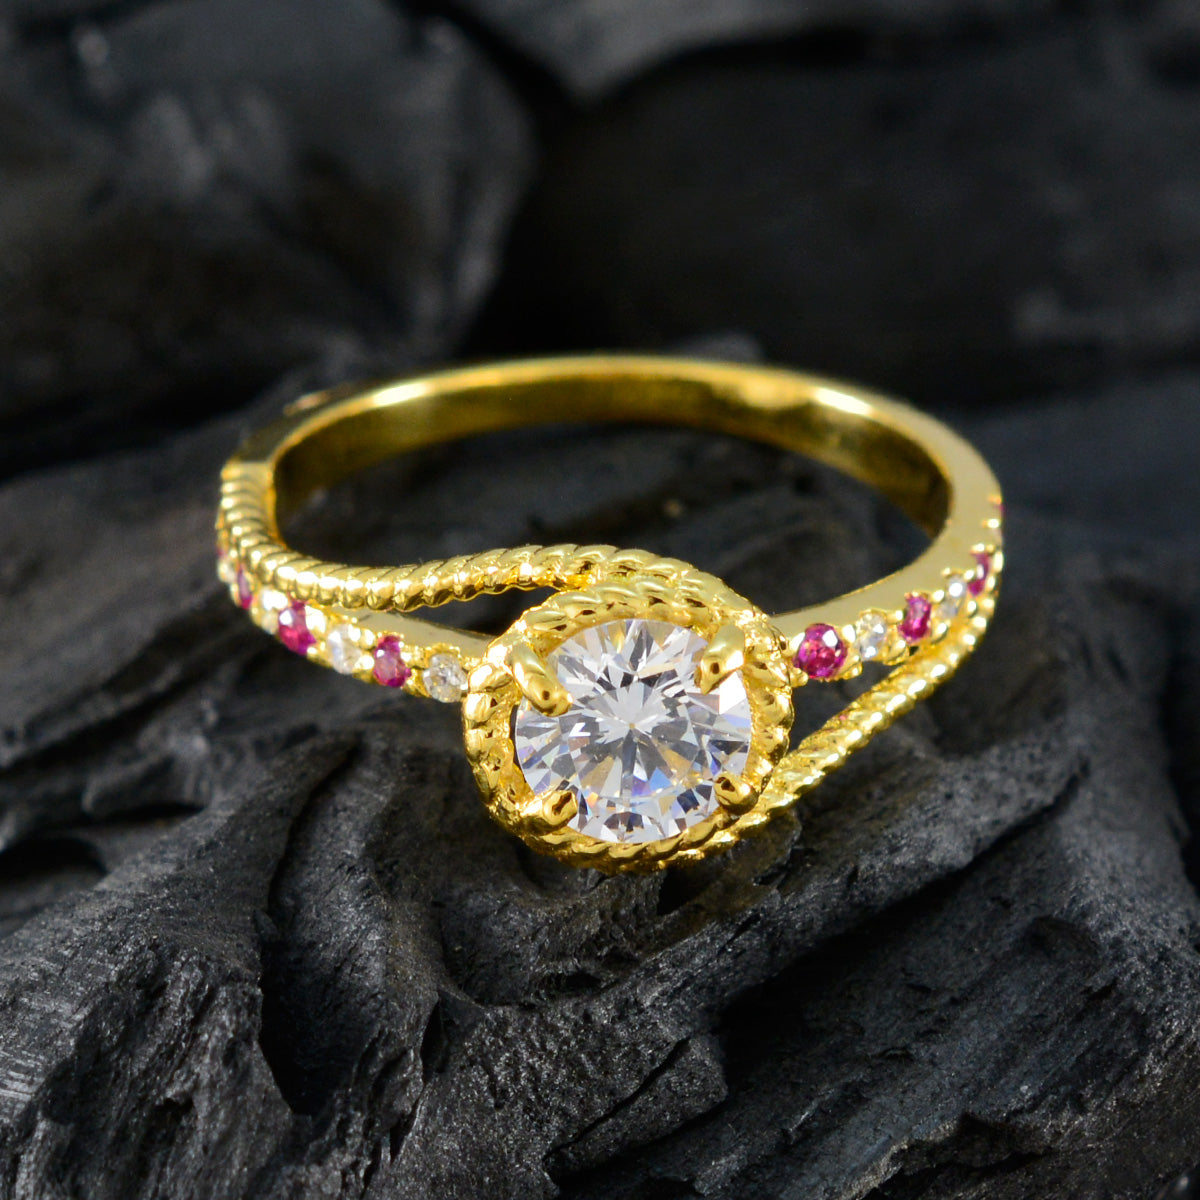 Riyo Beautiful Silver Ring With Yellow Gold Plating Ruby CZ Stone Round Shape Prong Setting  Jewelry